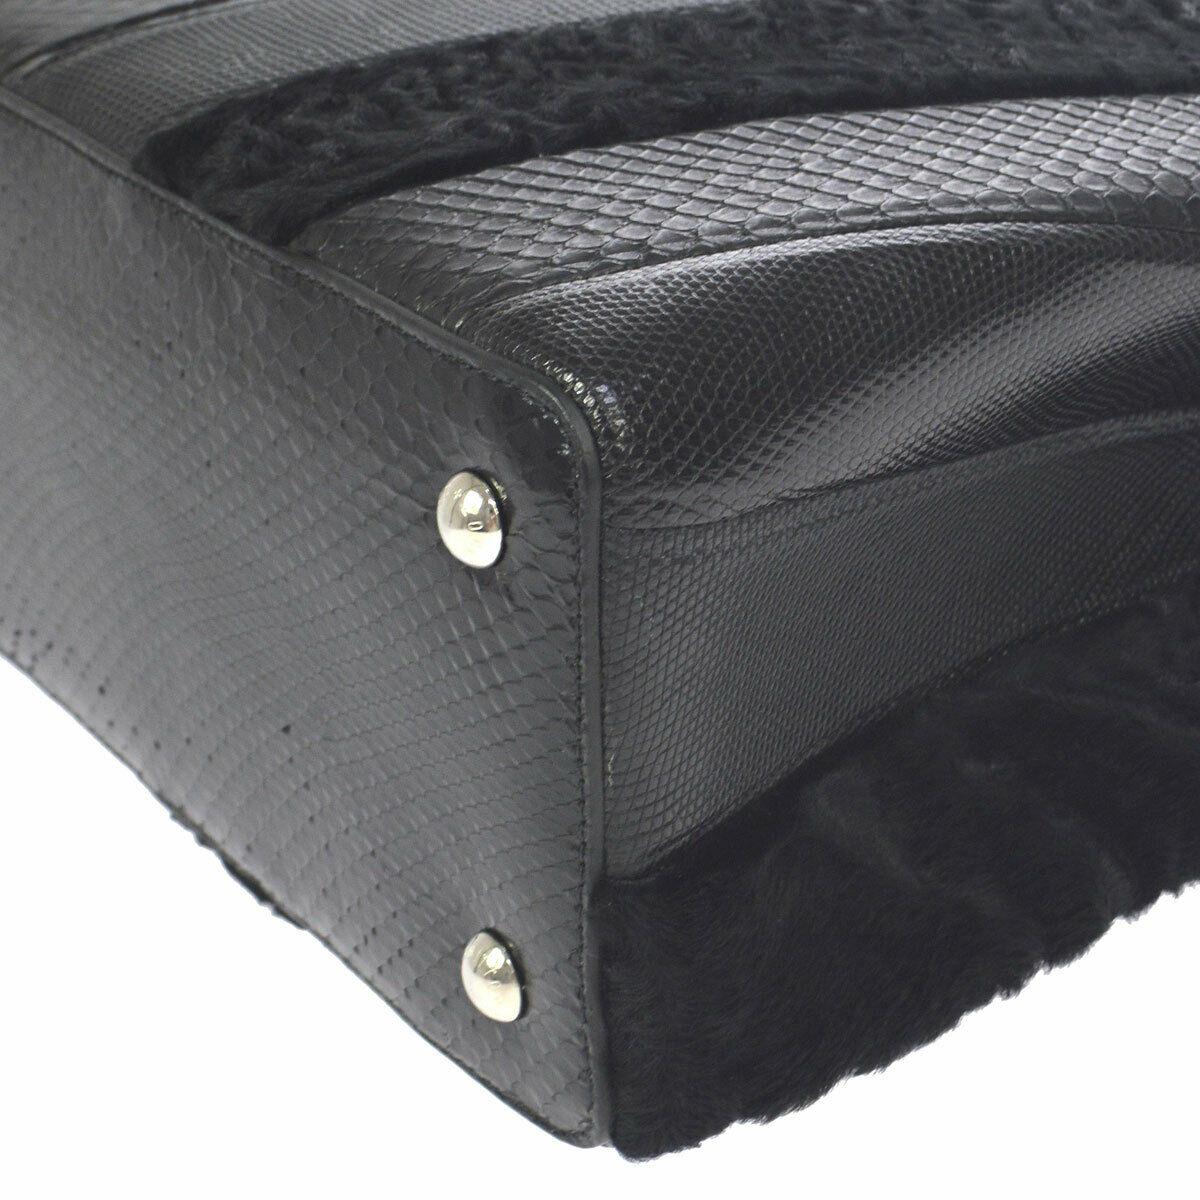 Women's Louis Vuitton Black Lizard Crocodile Exotic Silver Top handle Satchel Bag in Box